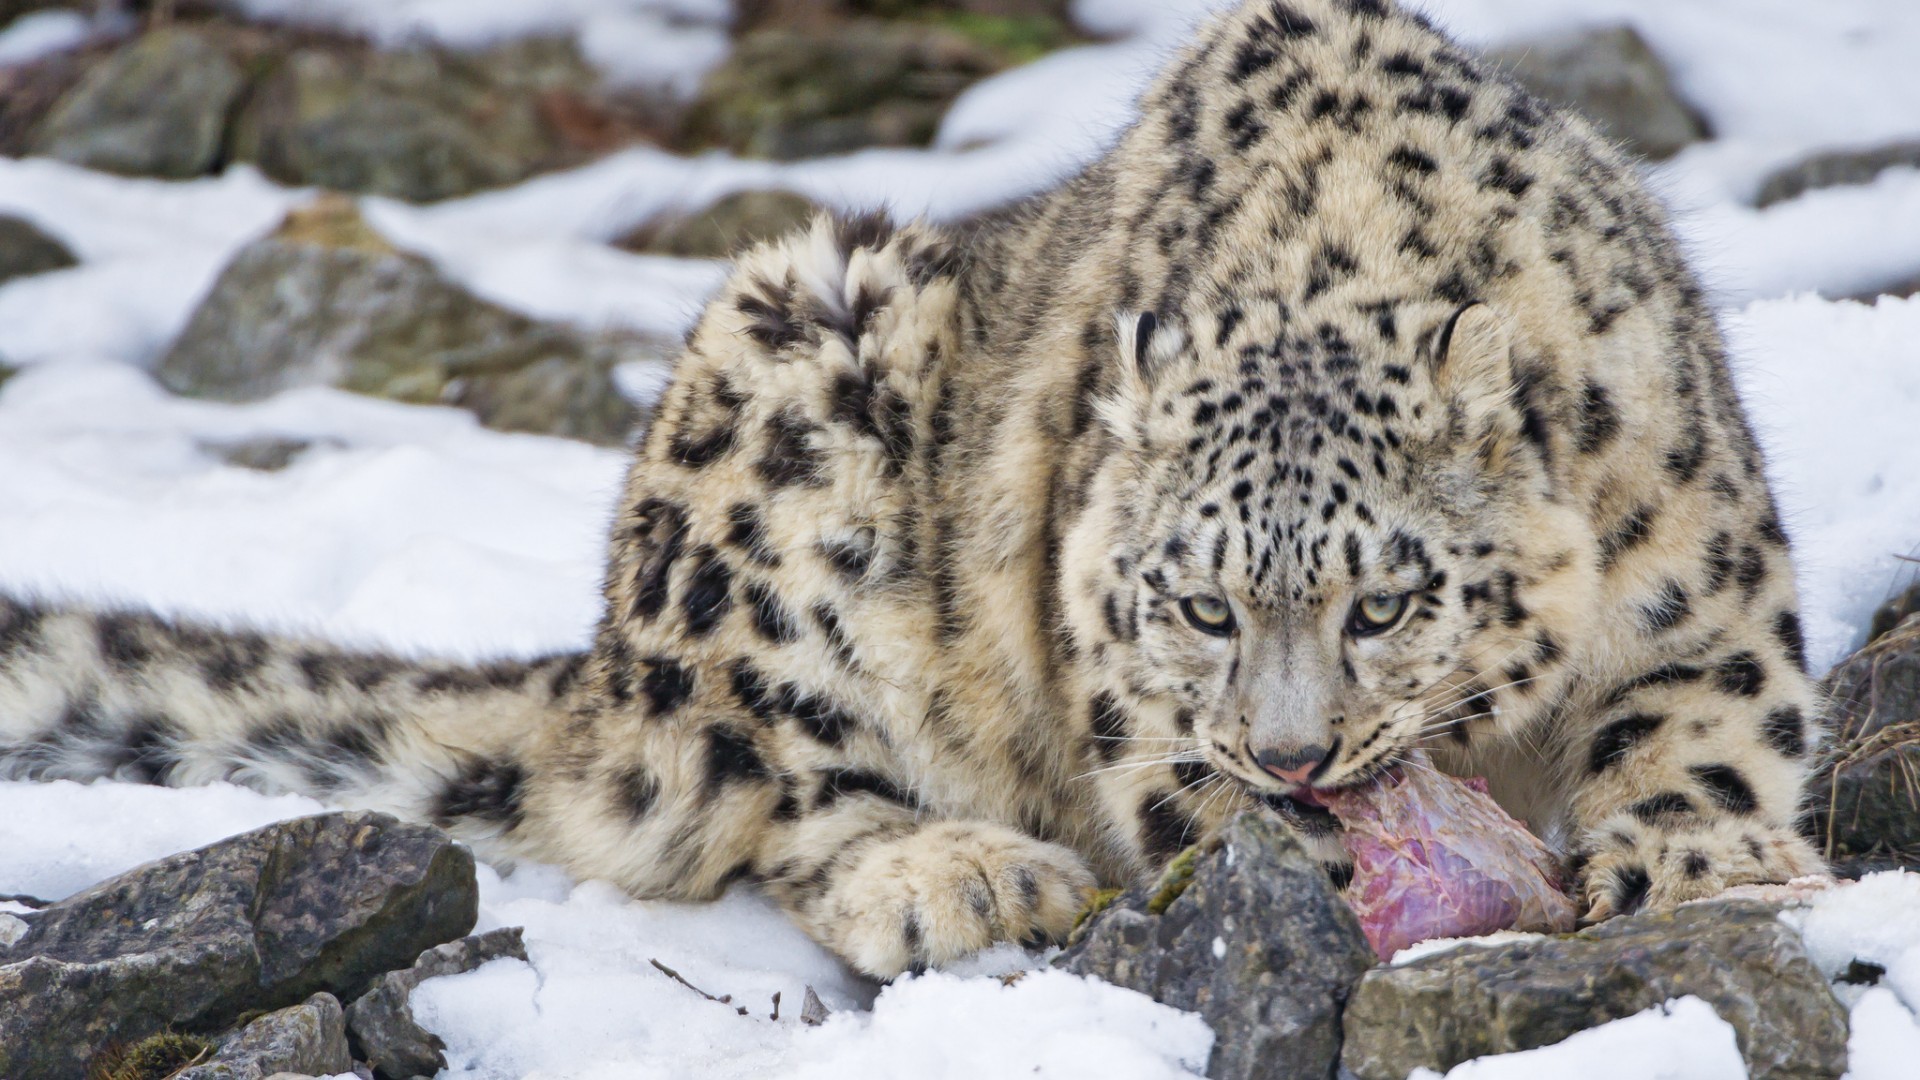 General 1920x1080 snow leopards leopard big cats animals mammals food eating wildlife